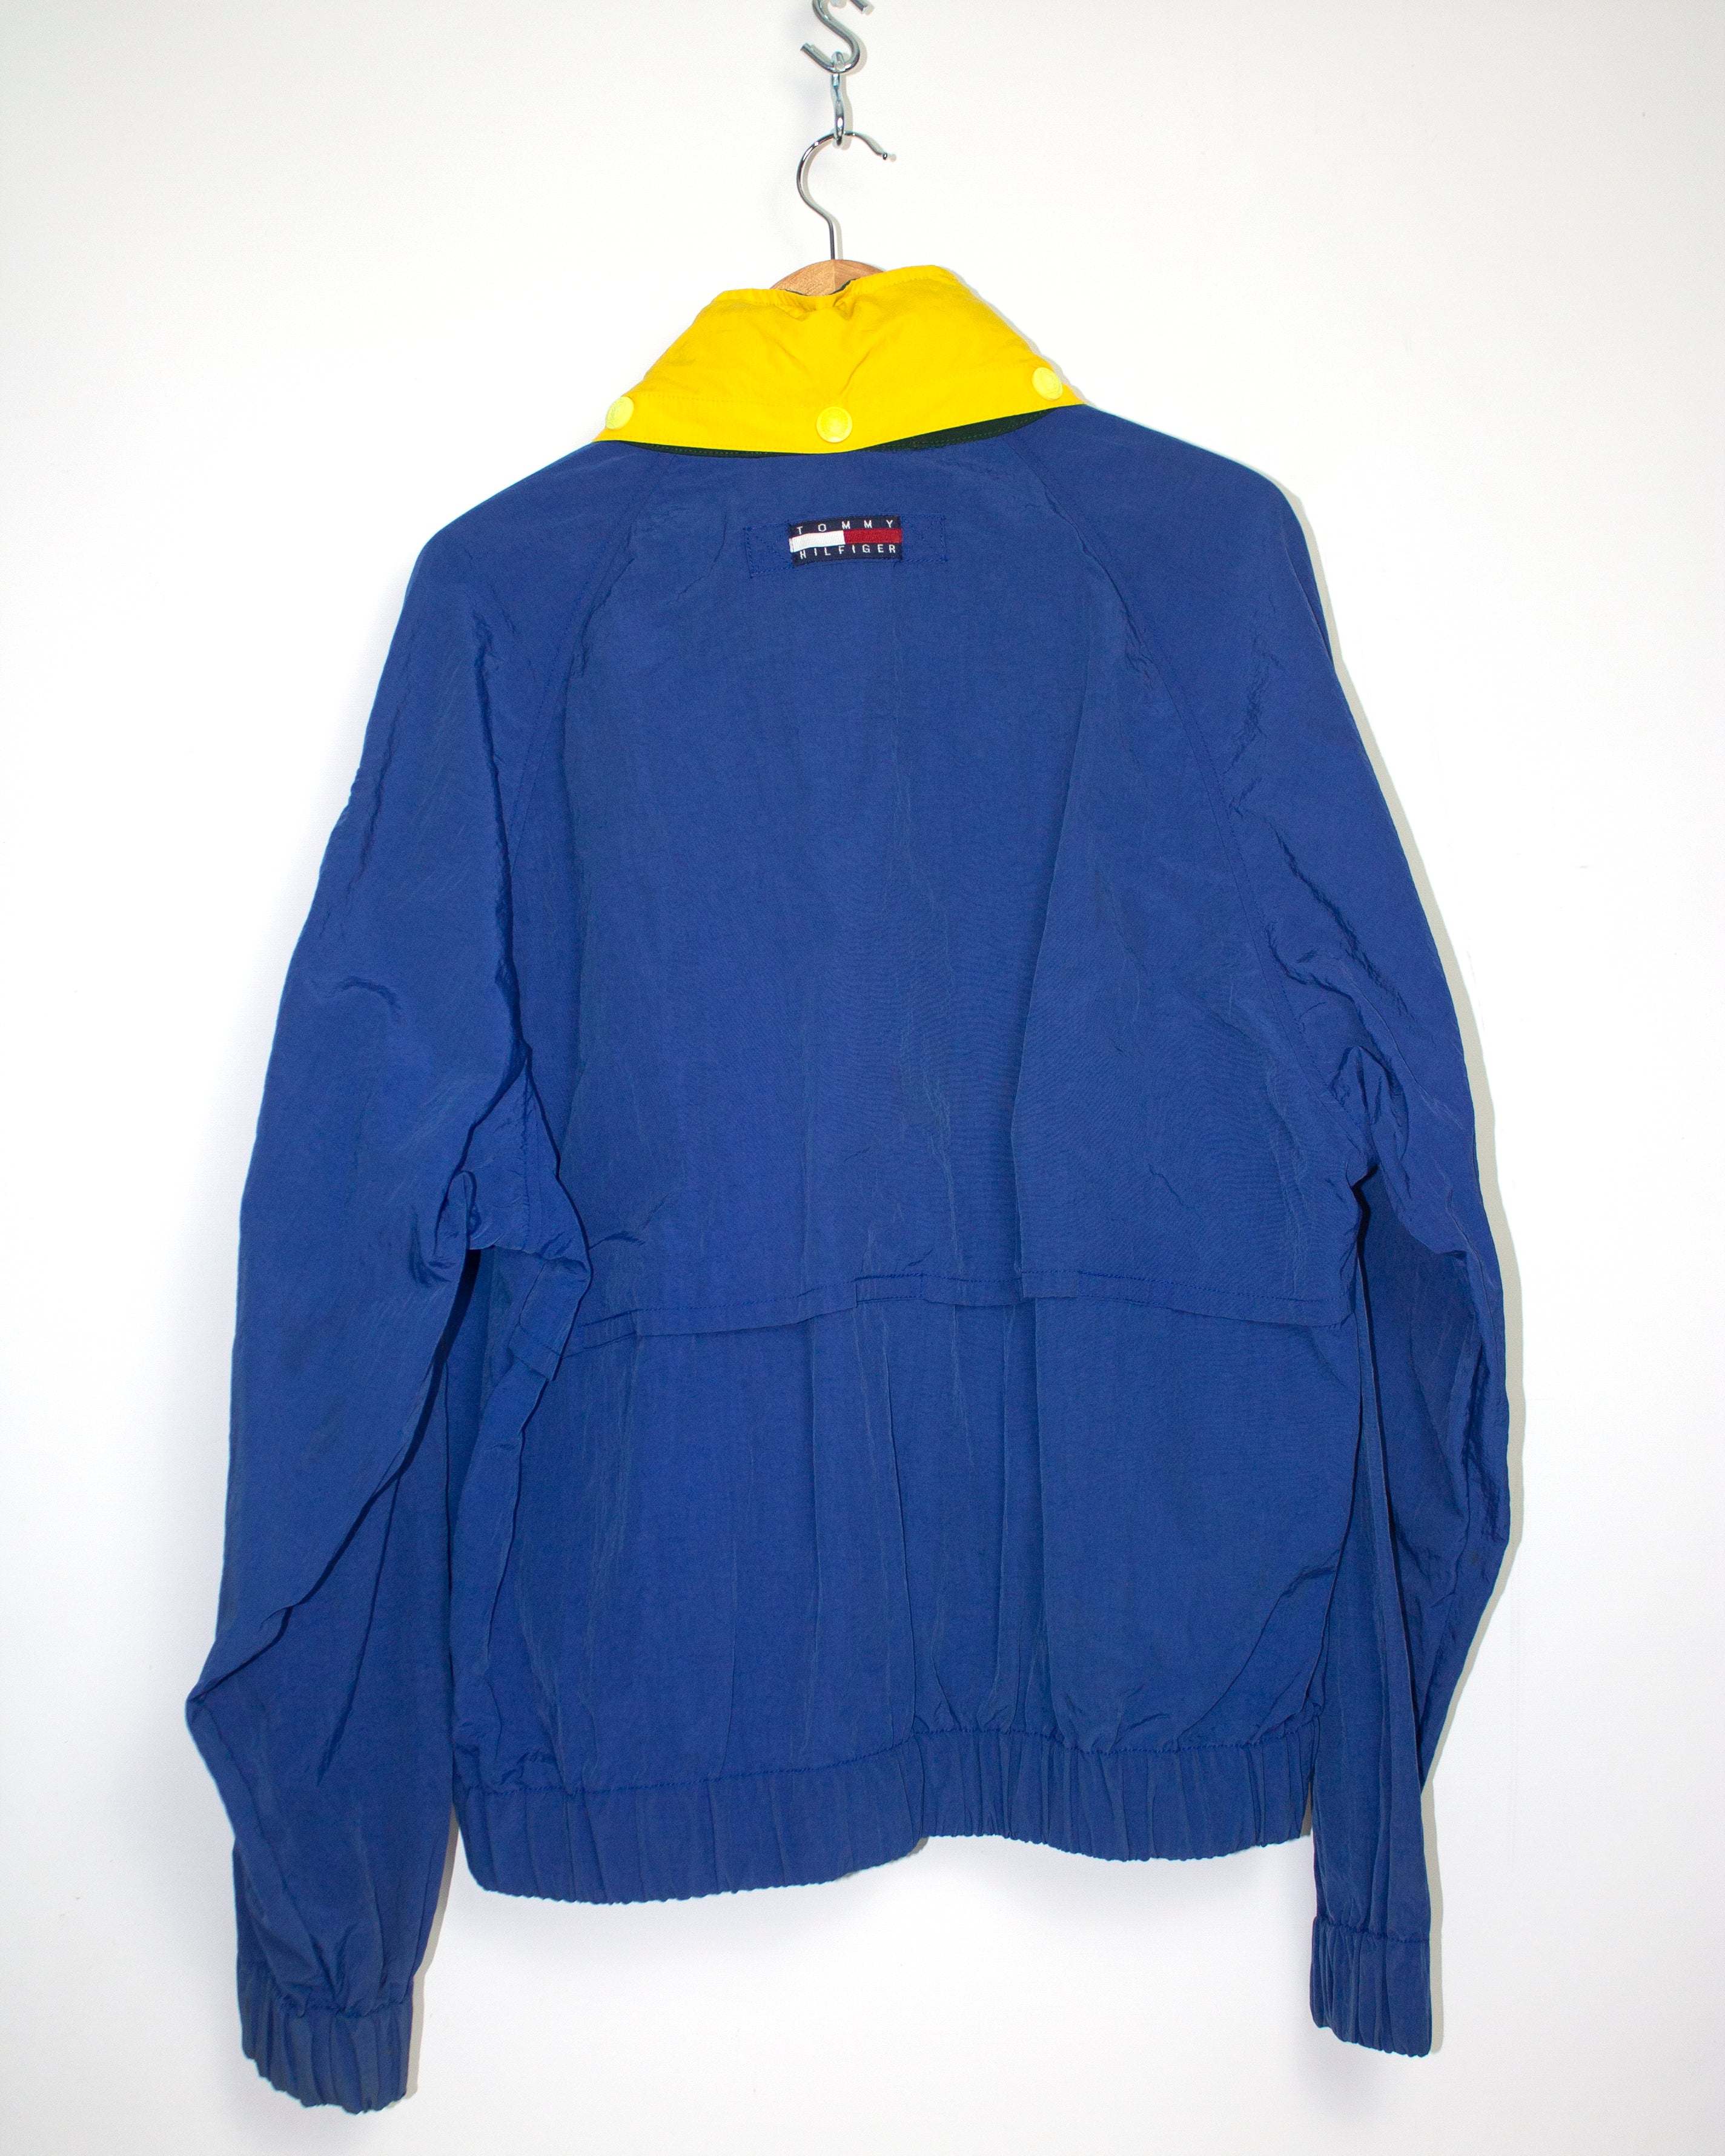 Vintage Tommy Hilfiger Spellout Jacket Sz L